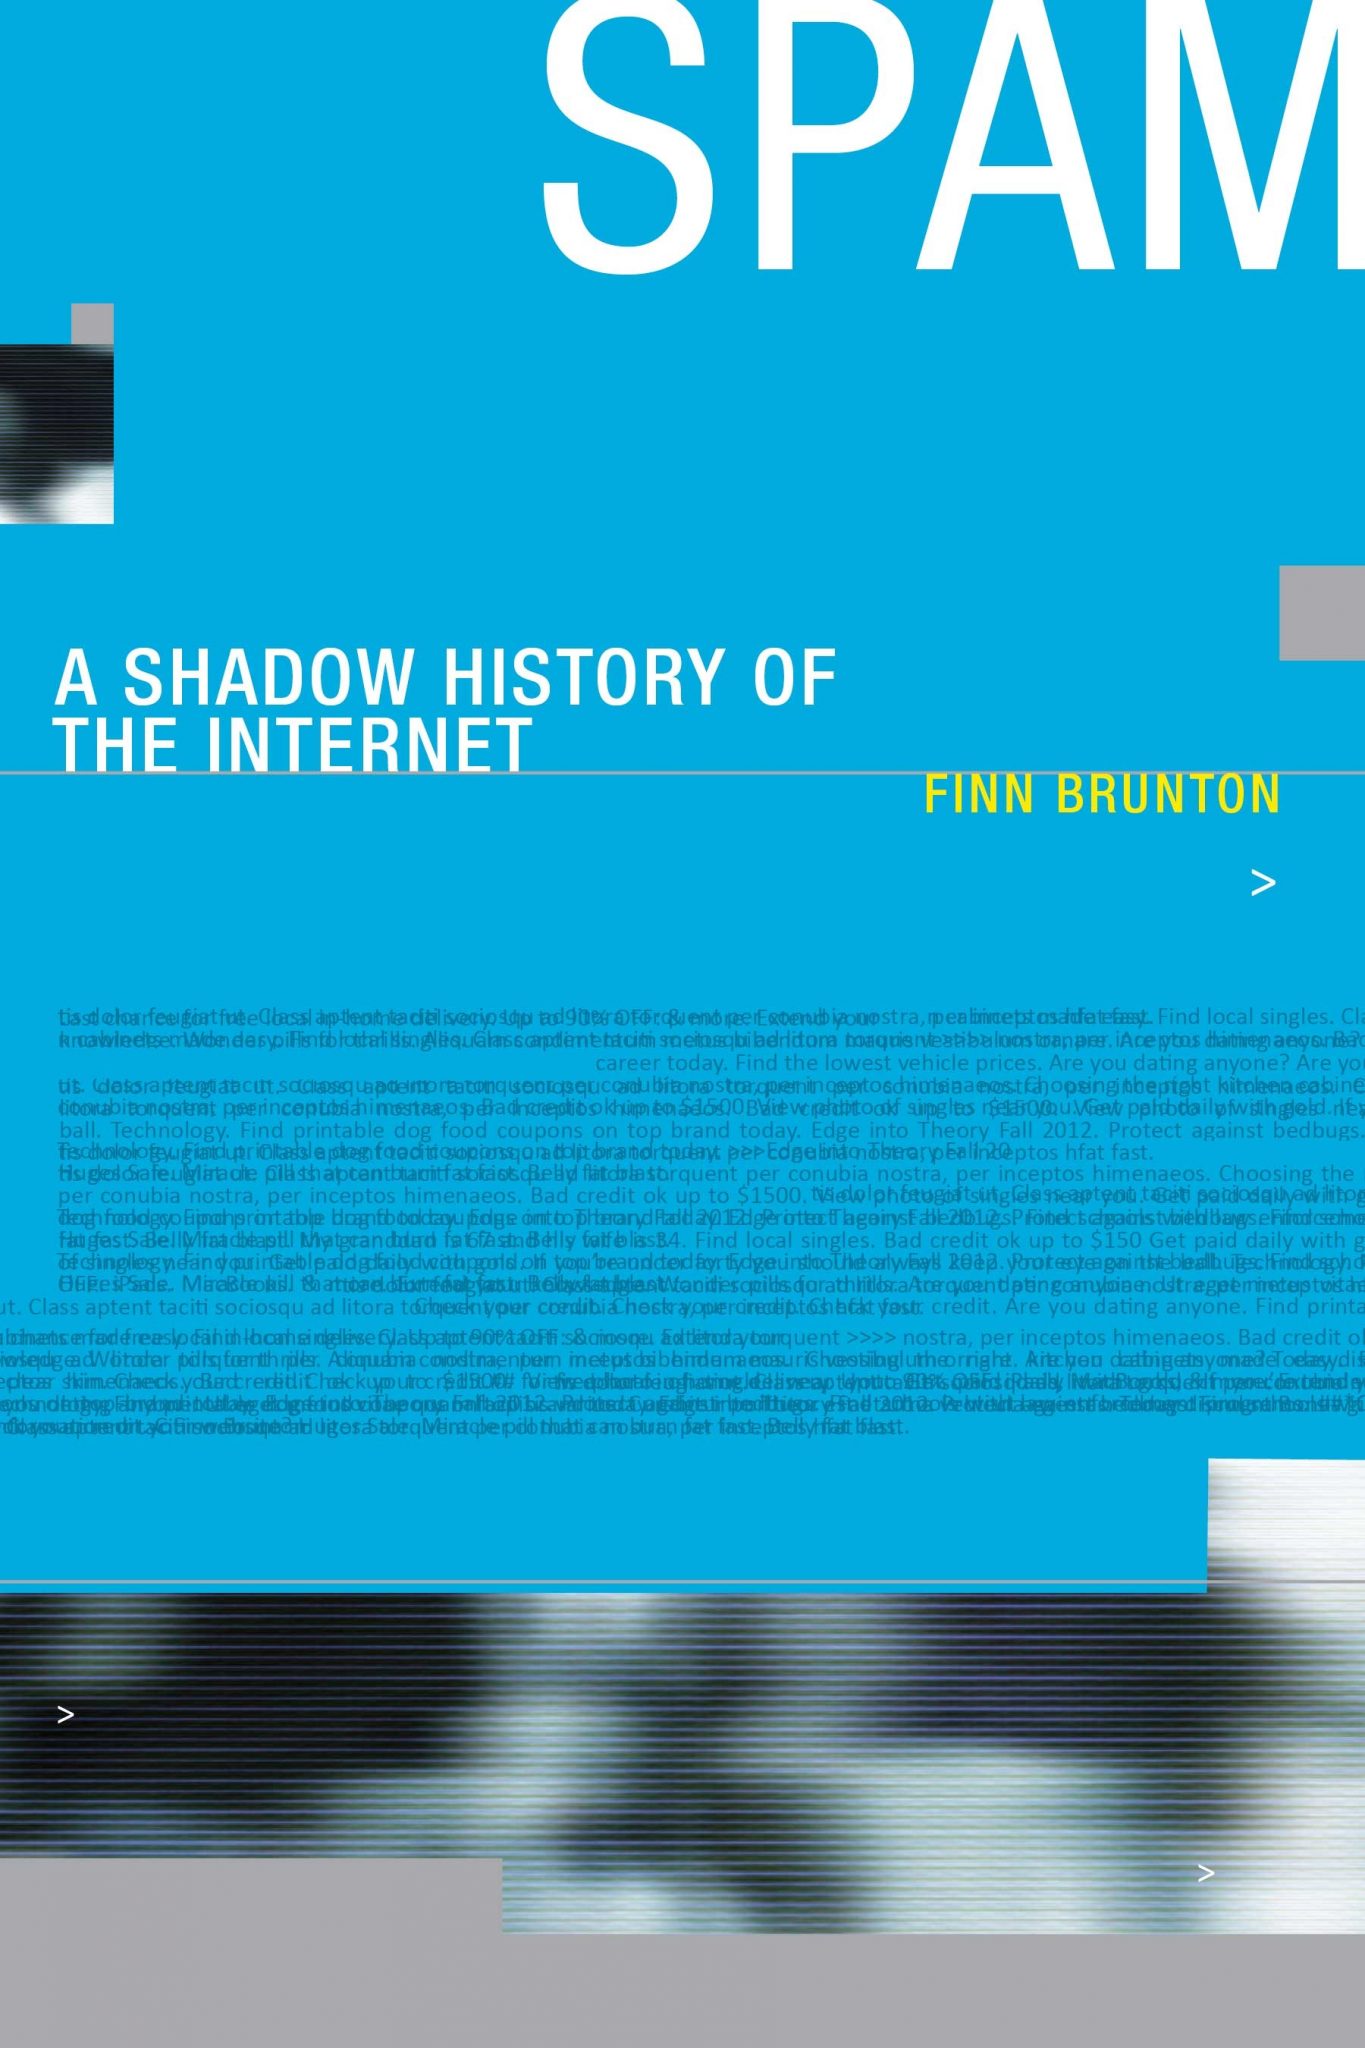 Spam: A Shadow History of the Internet by Finn Brunton (MIT Pres)